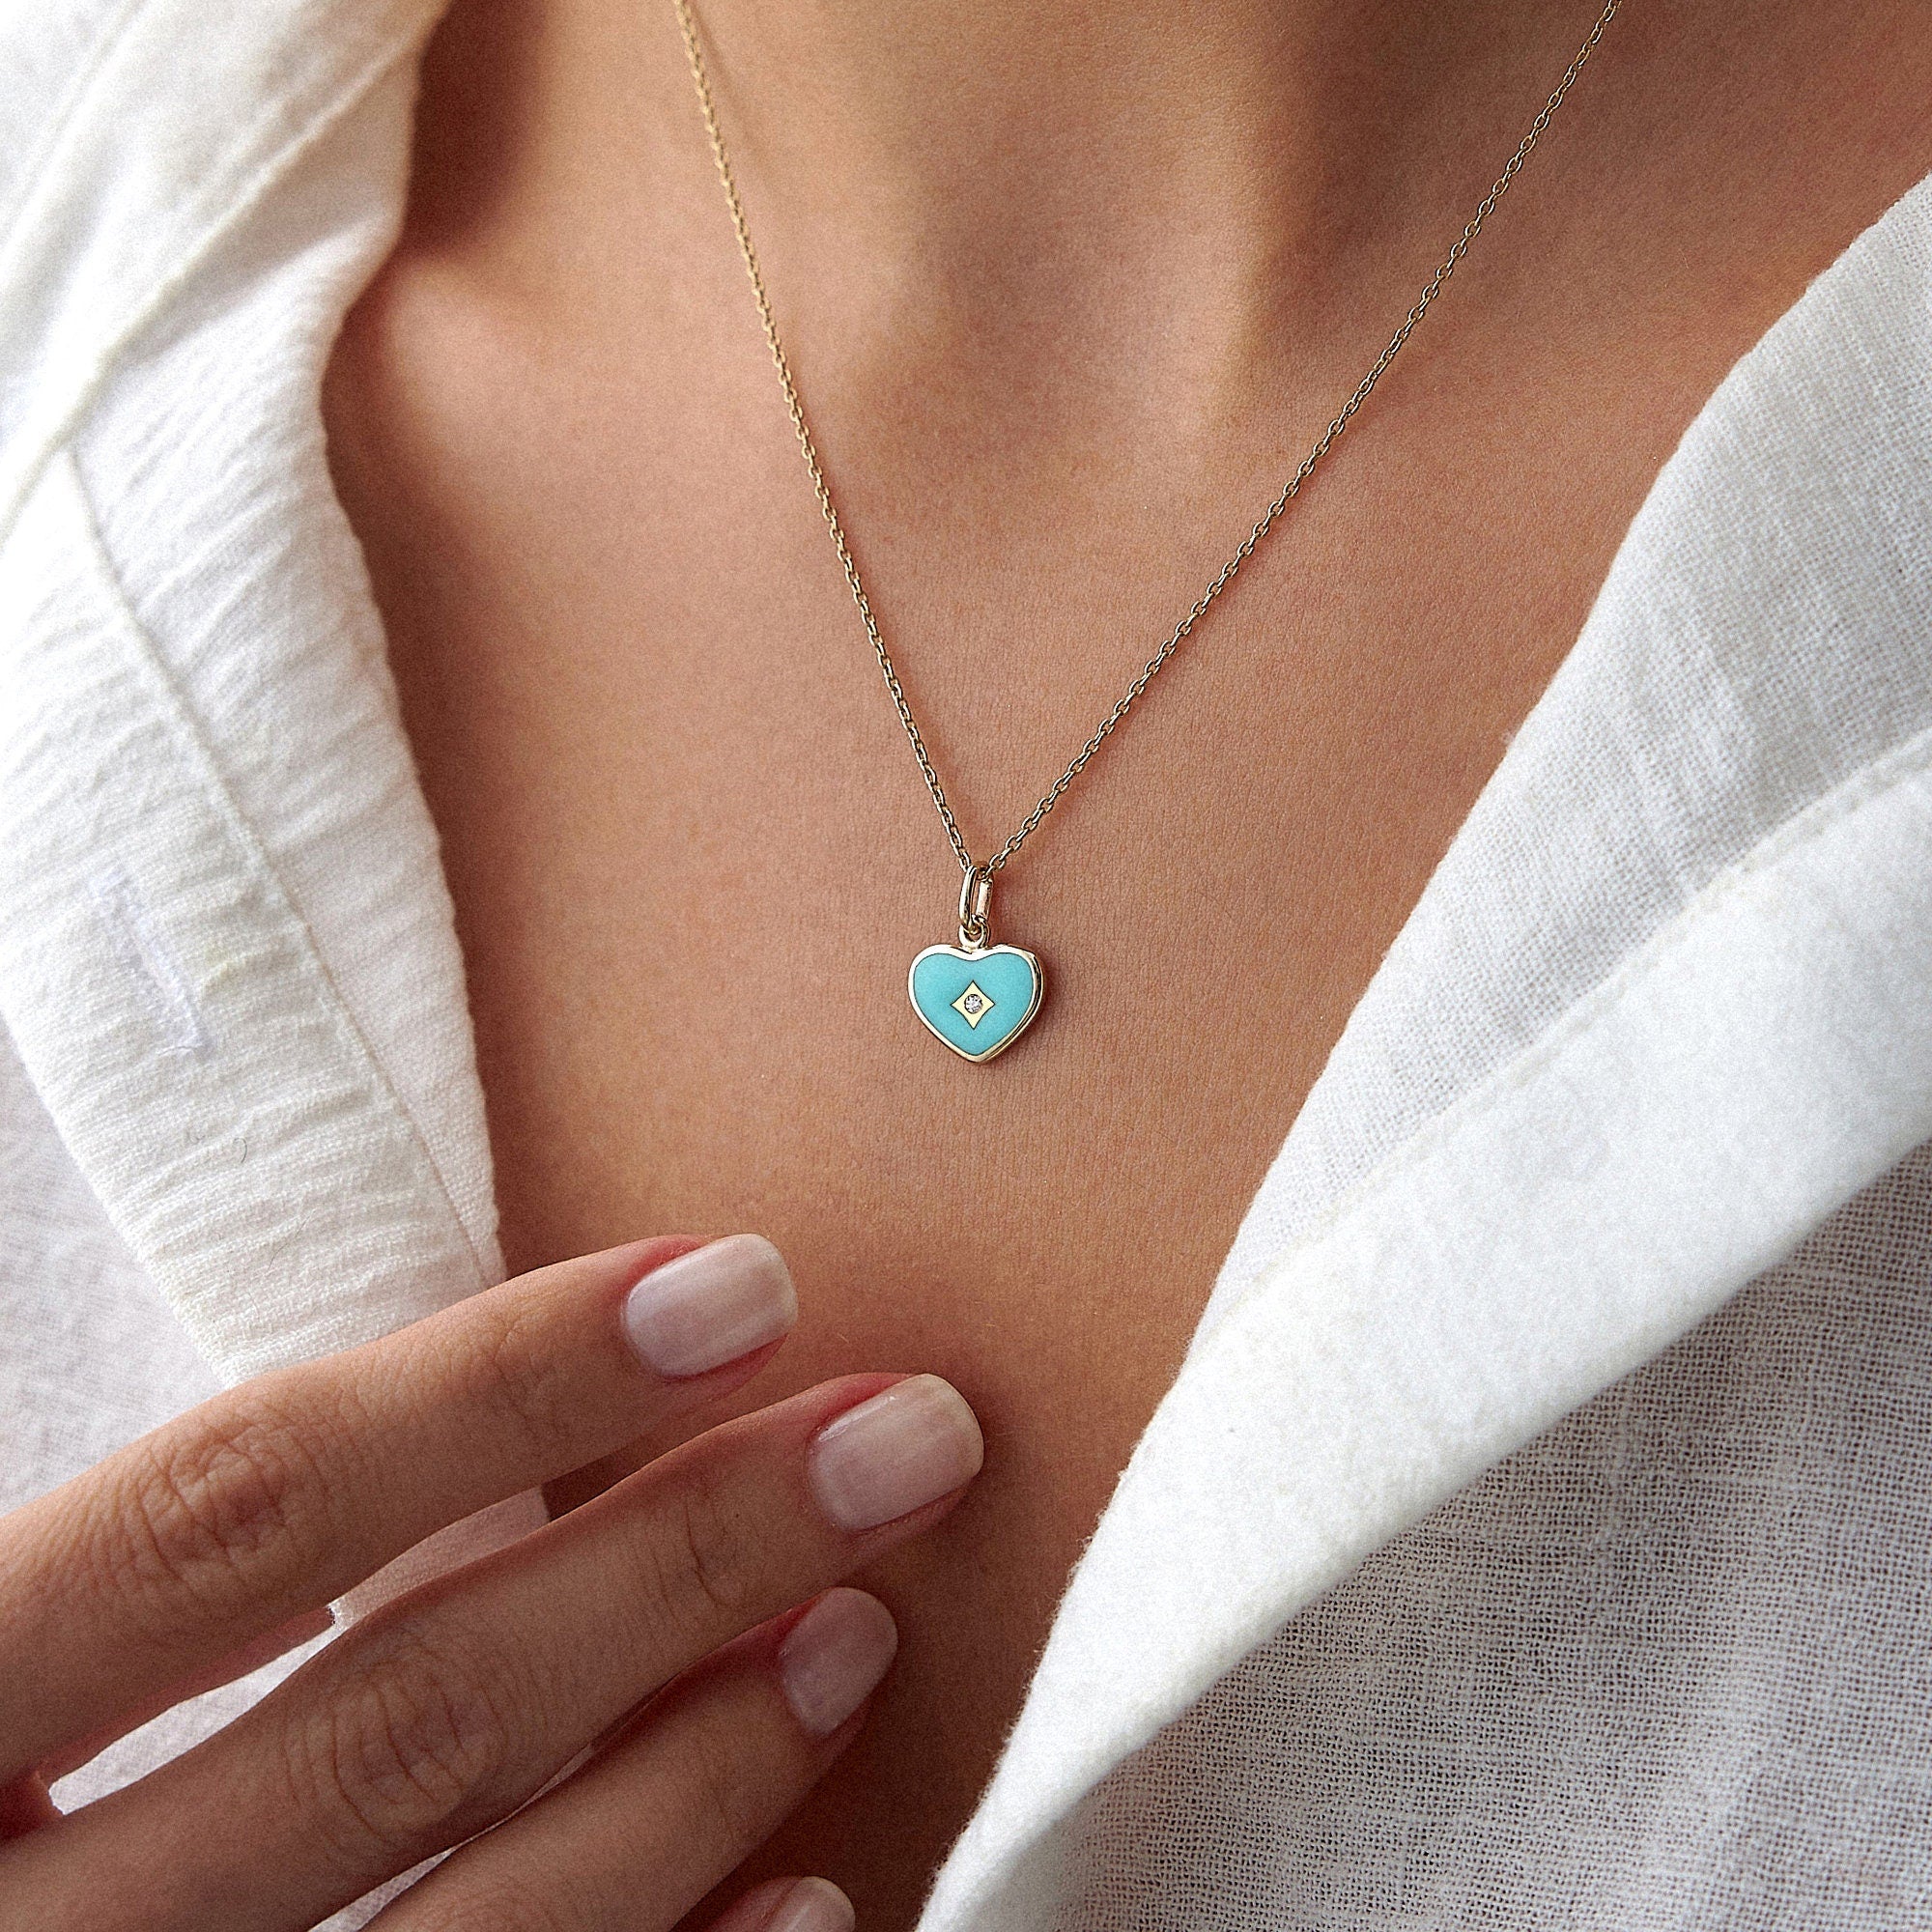 Tiny Diamond Turquoise Enamel Heart Pendant Necklace in 14K Gold